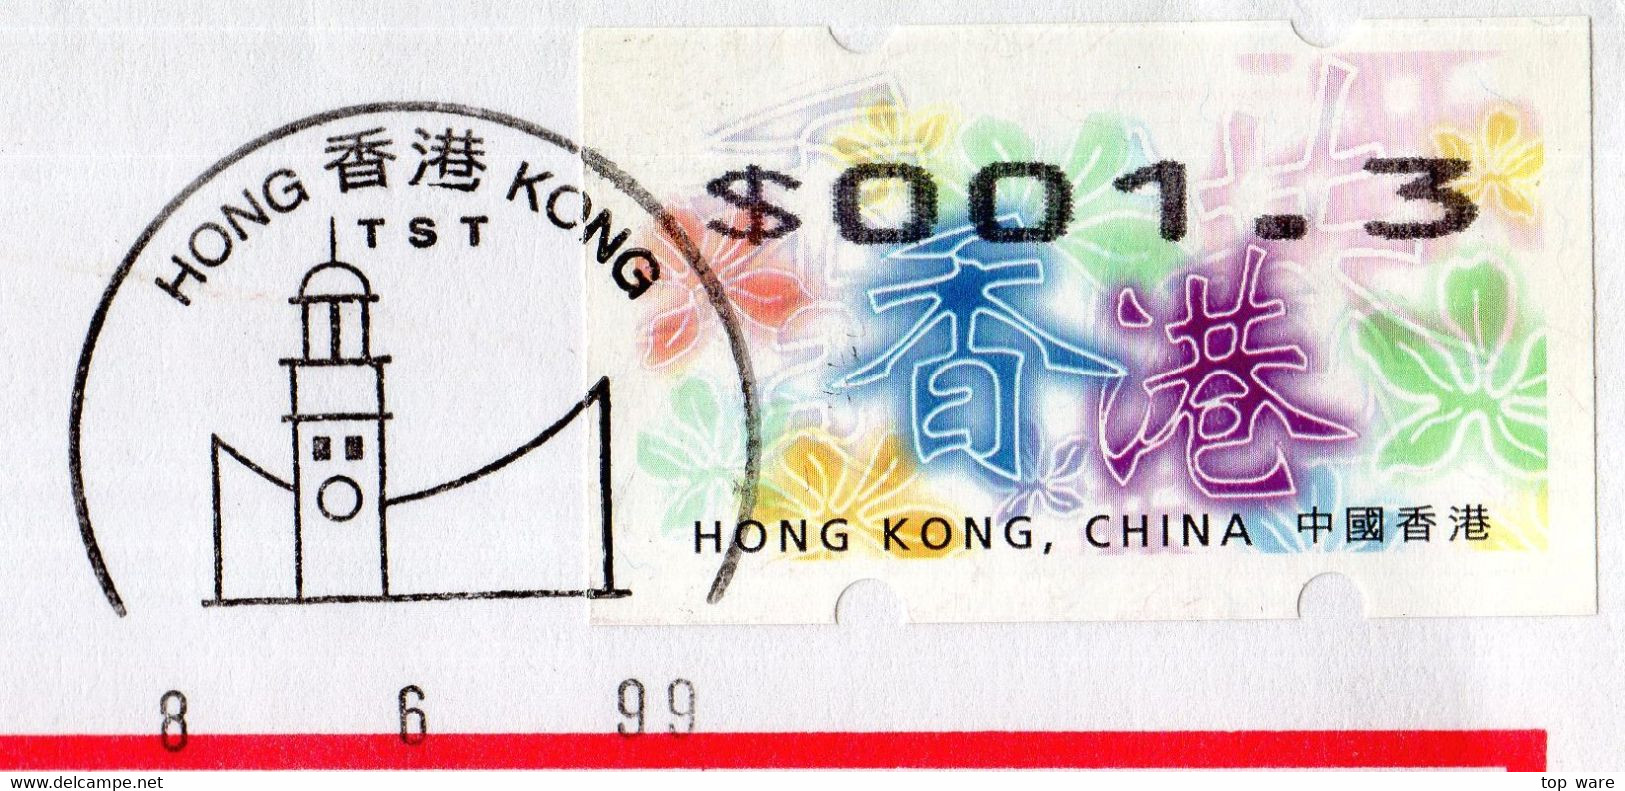 Hong Kong China ATM Stamps, 1998, Orchid Bloom Bauhinia, $1.30 On TST Letter 8.6.99 Receipt, Nagler N718, Frama Hongkong - Automatenmarken